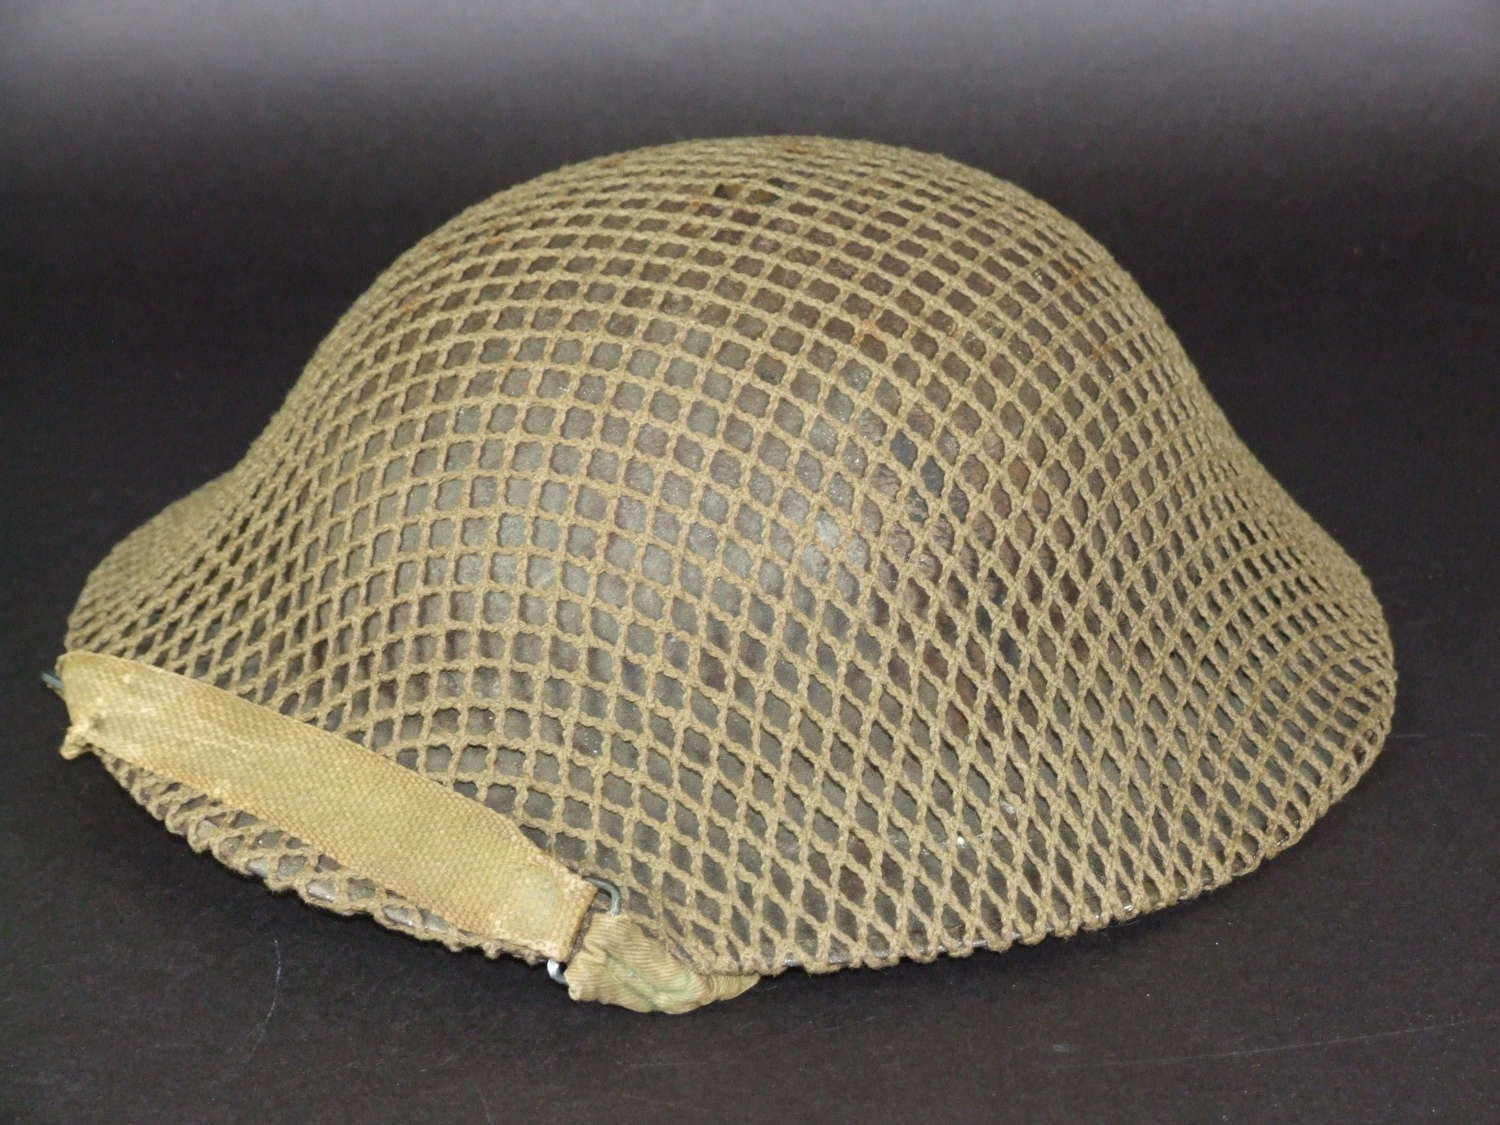 British Mk1* Brodie Helmet with Net. 1938 Dated Liner